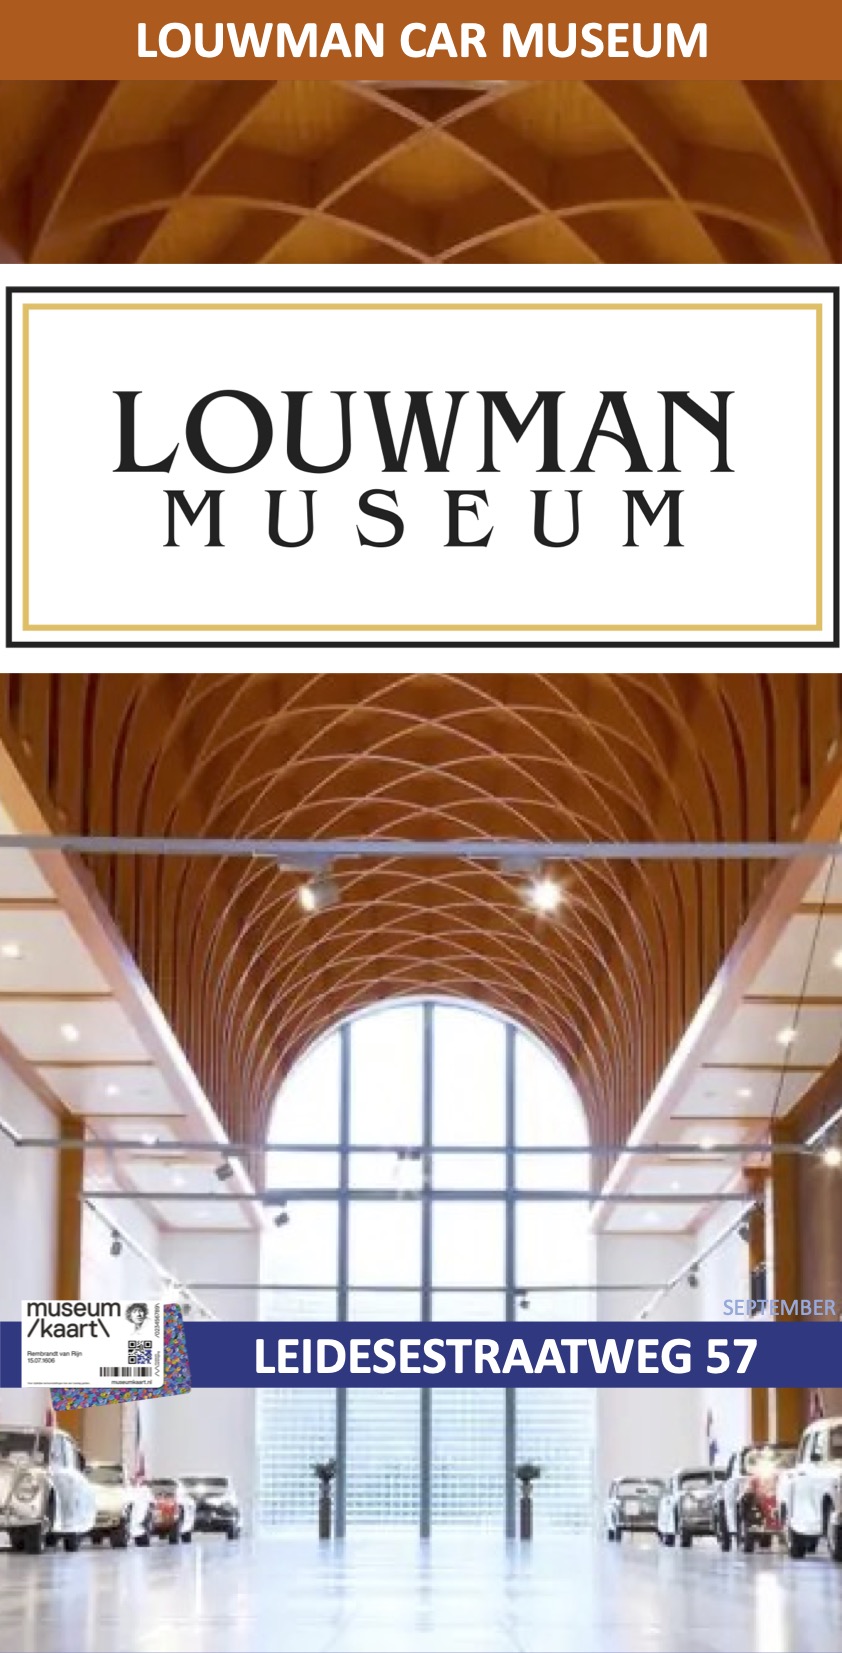 Louwman Automuseum Wassenaar Museumkaart september